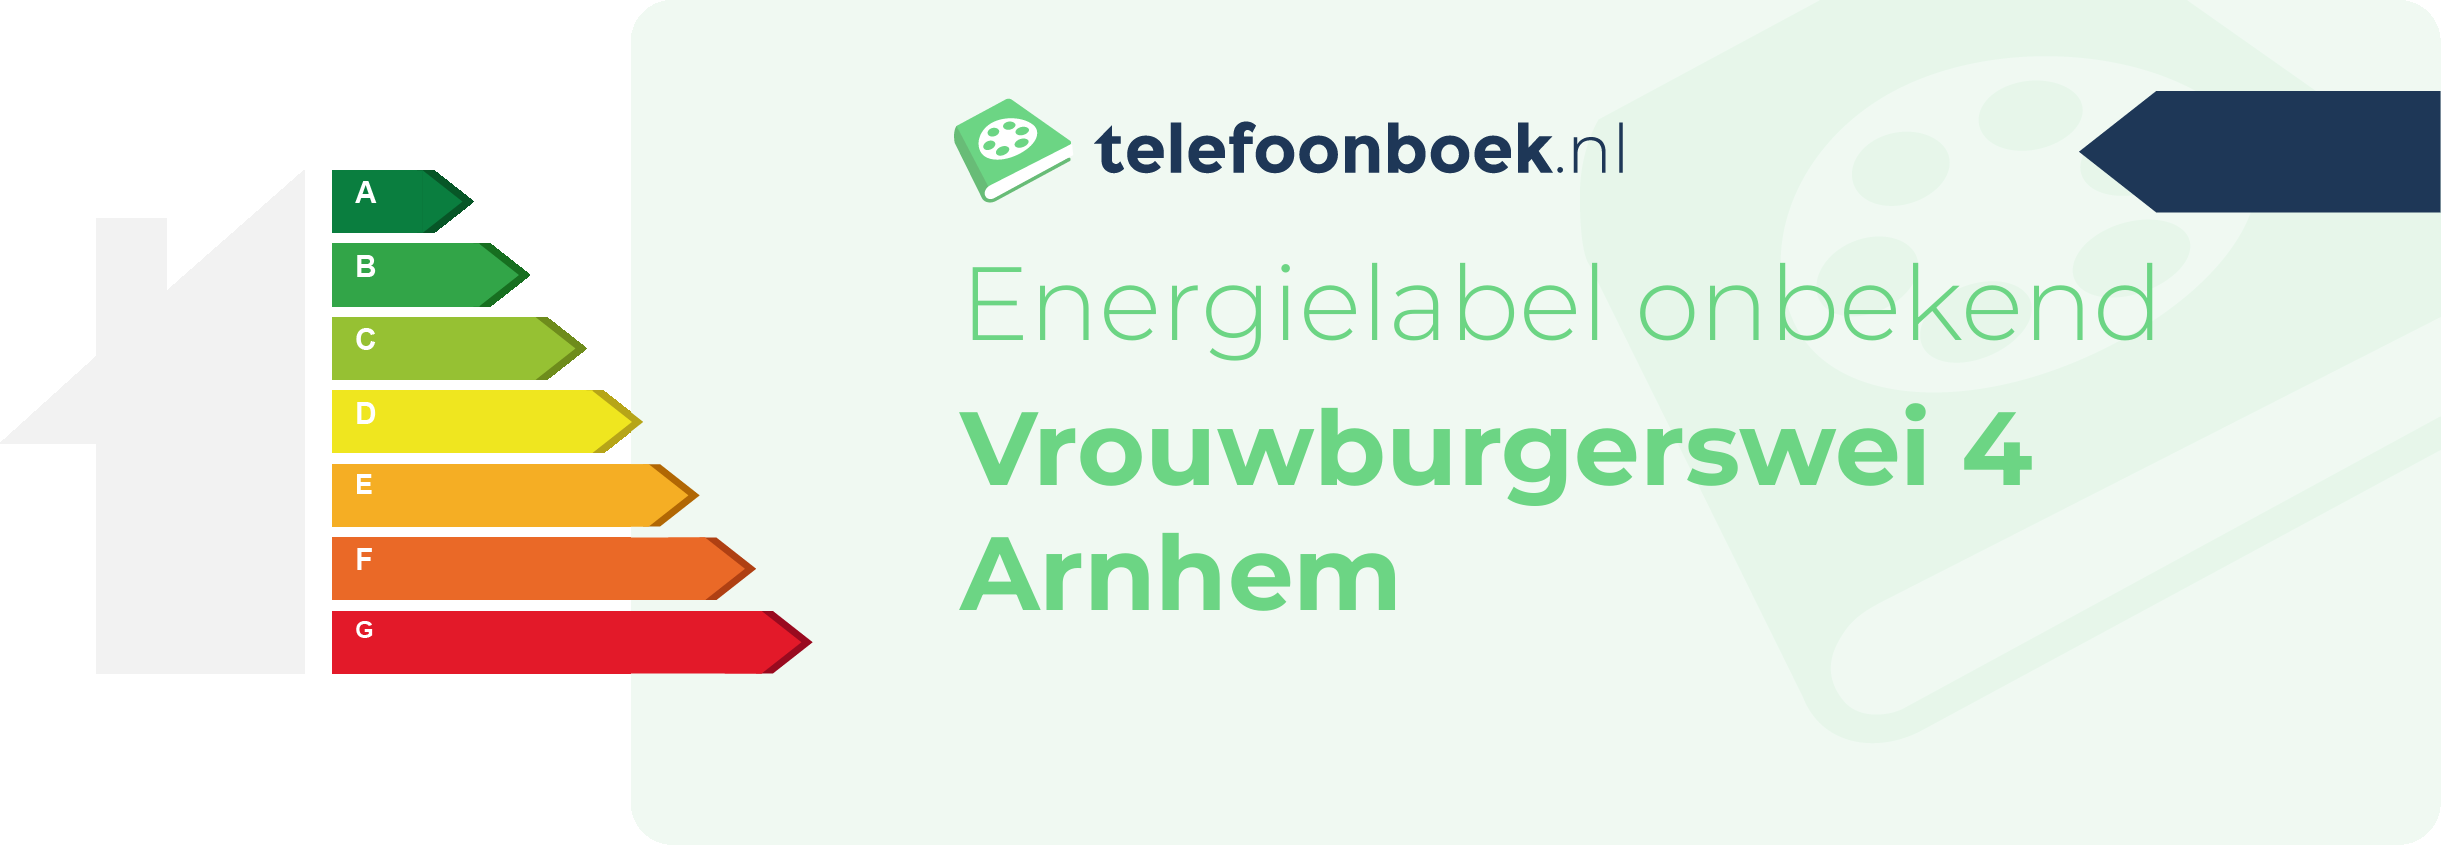 Energielabel Vrouwburgerswei 4 Arnhem